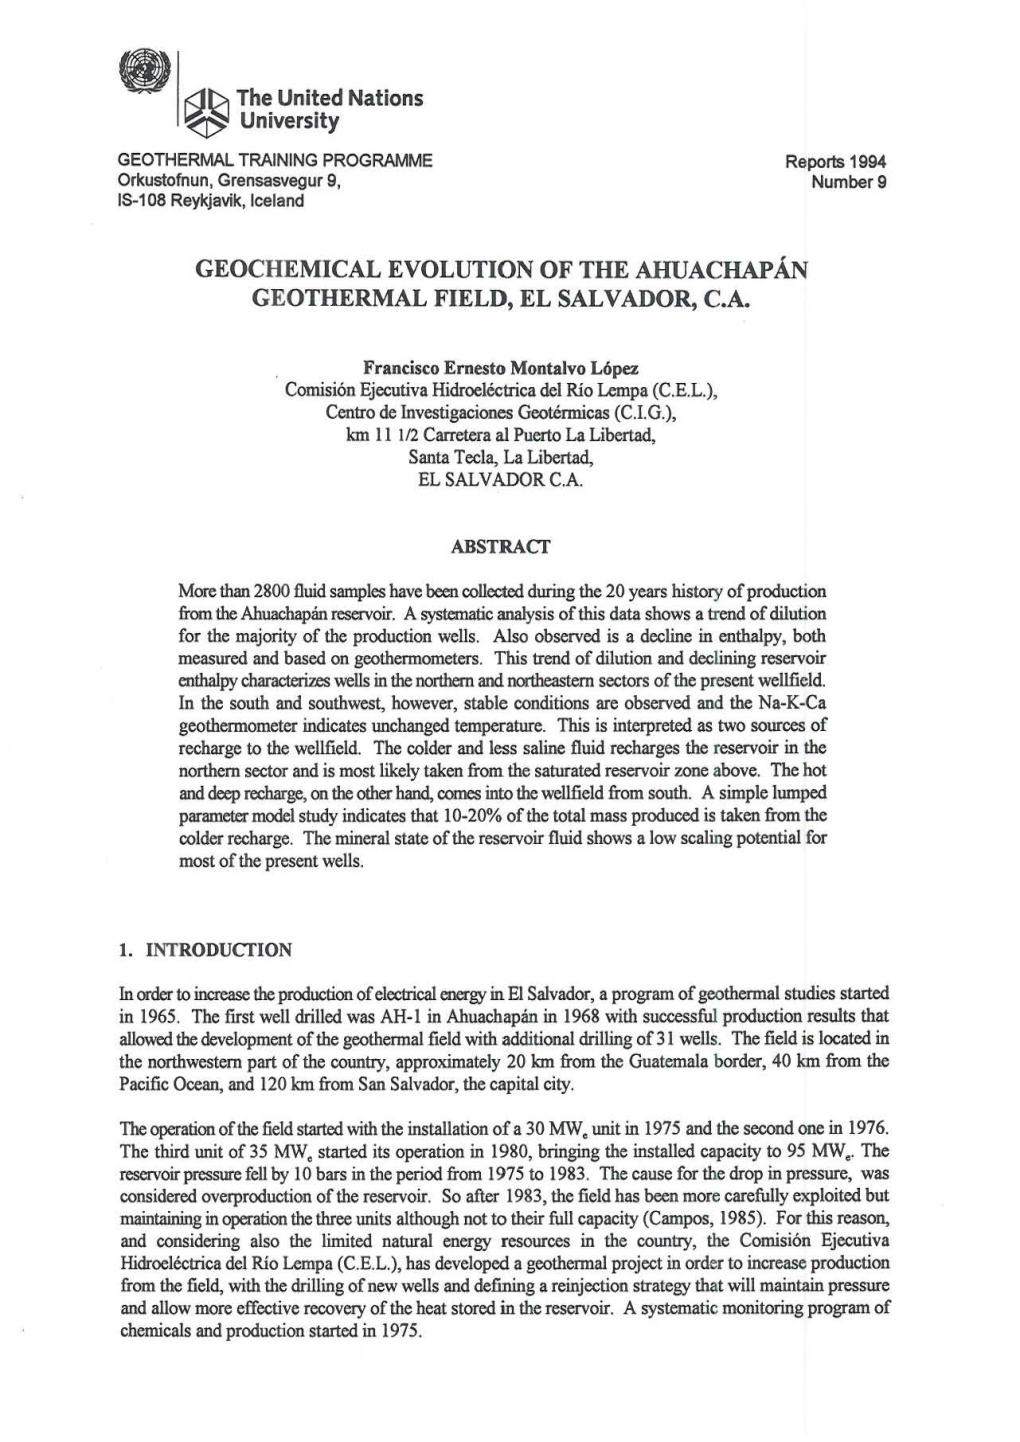 Geochemical Evolution of the Ahuachapan Geothermal Field, El Sal Vador, C.A